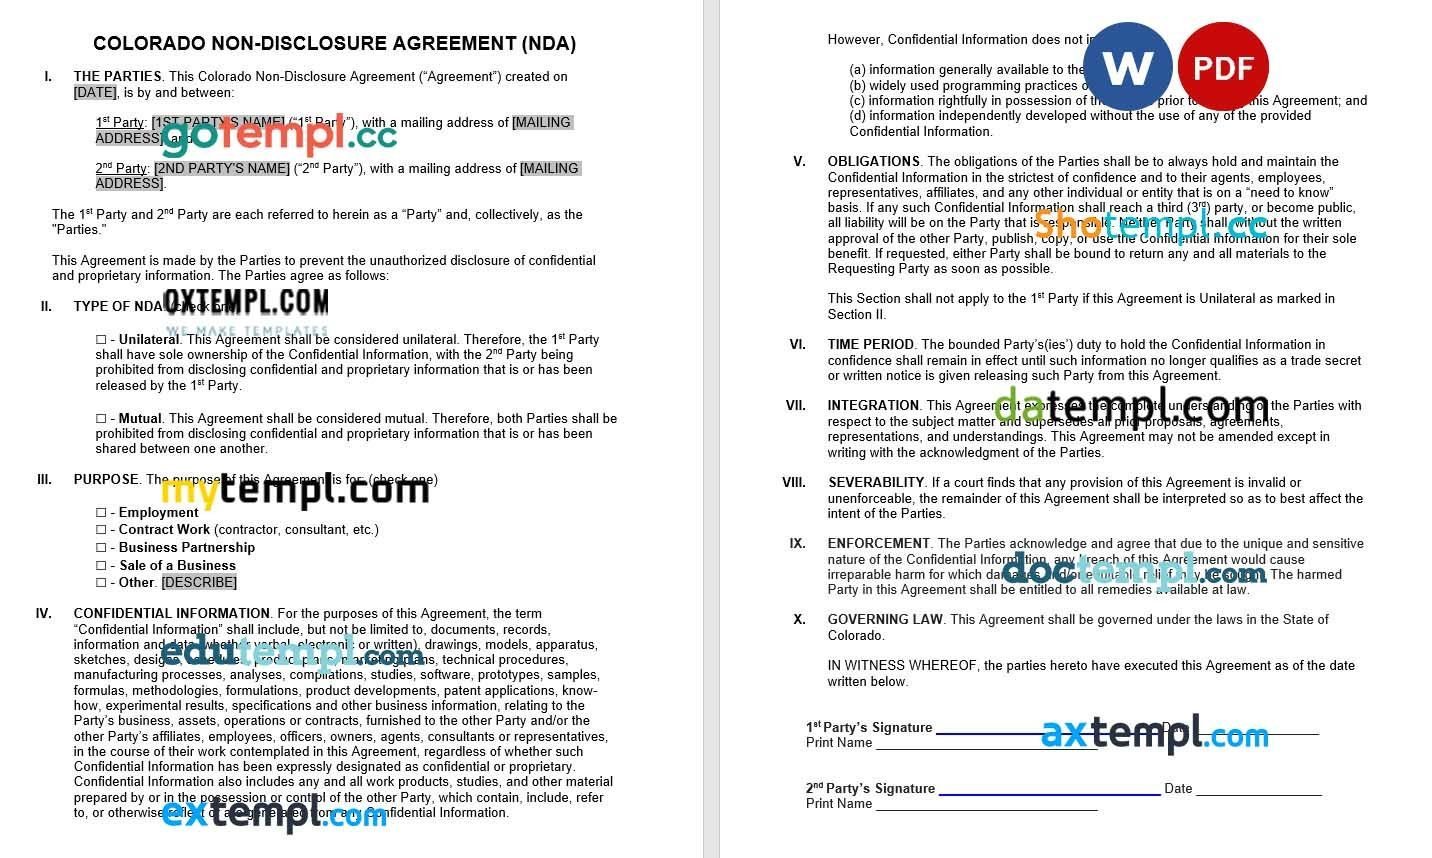 Colorado Non-Disclosure Agreement NDA Word example, completely editable